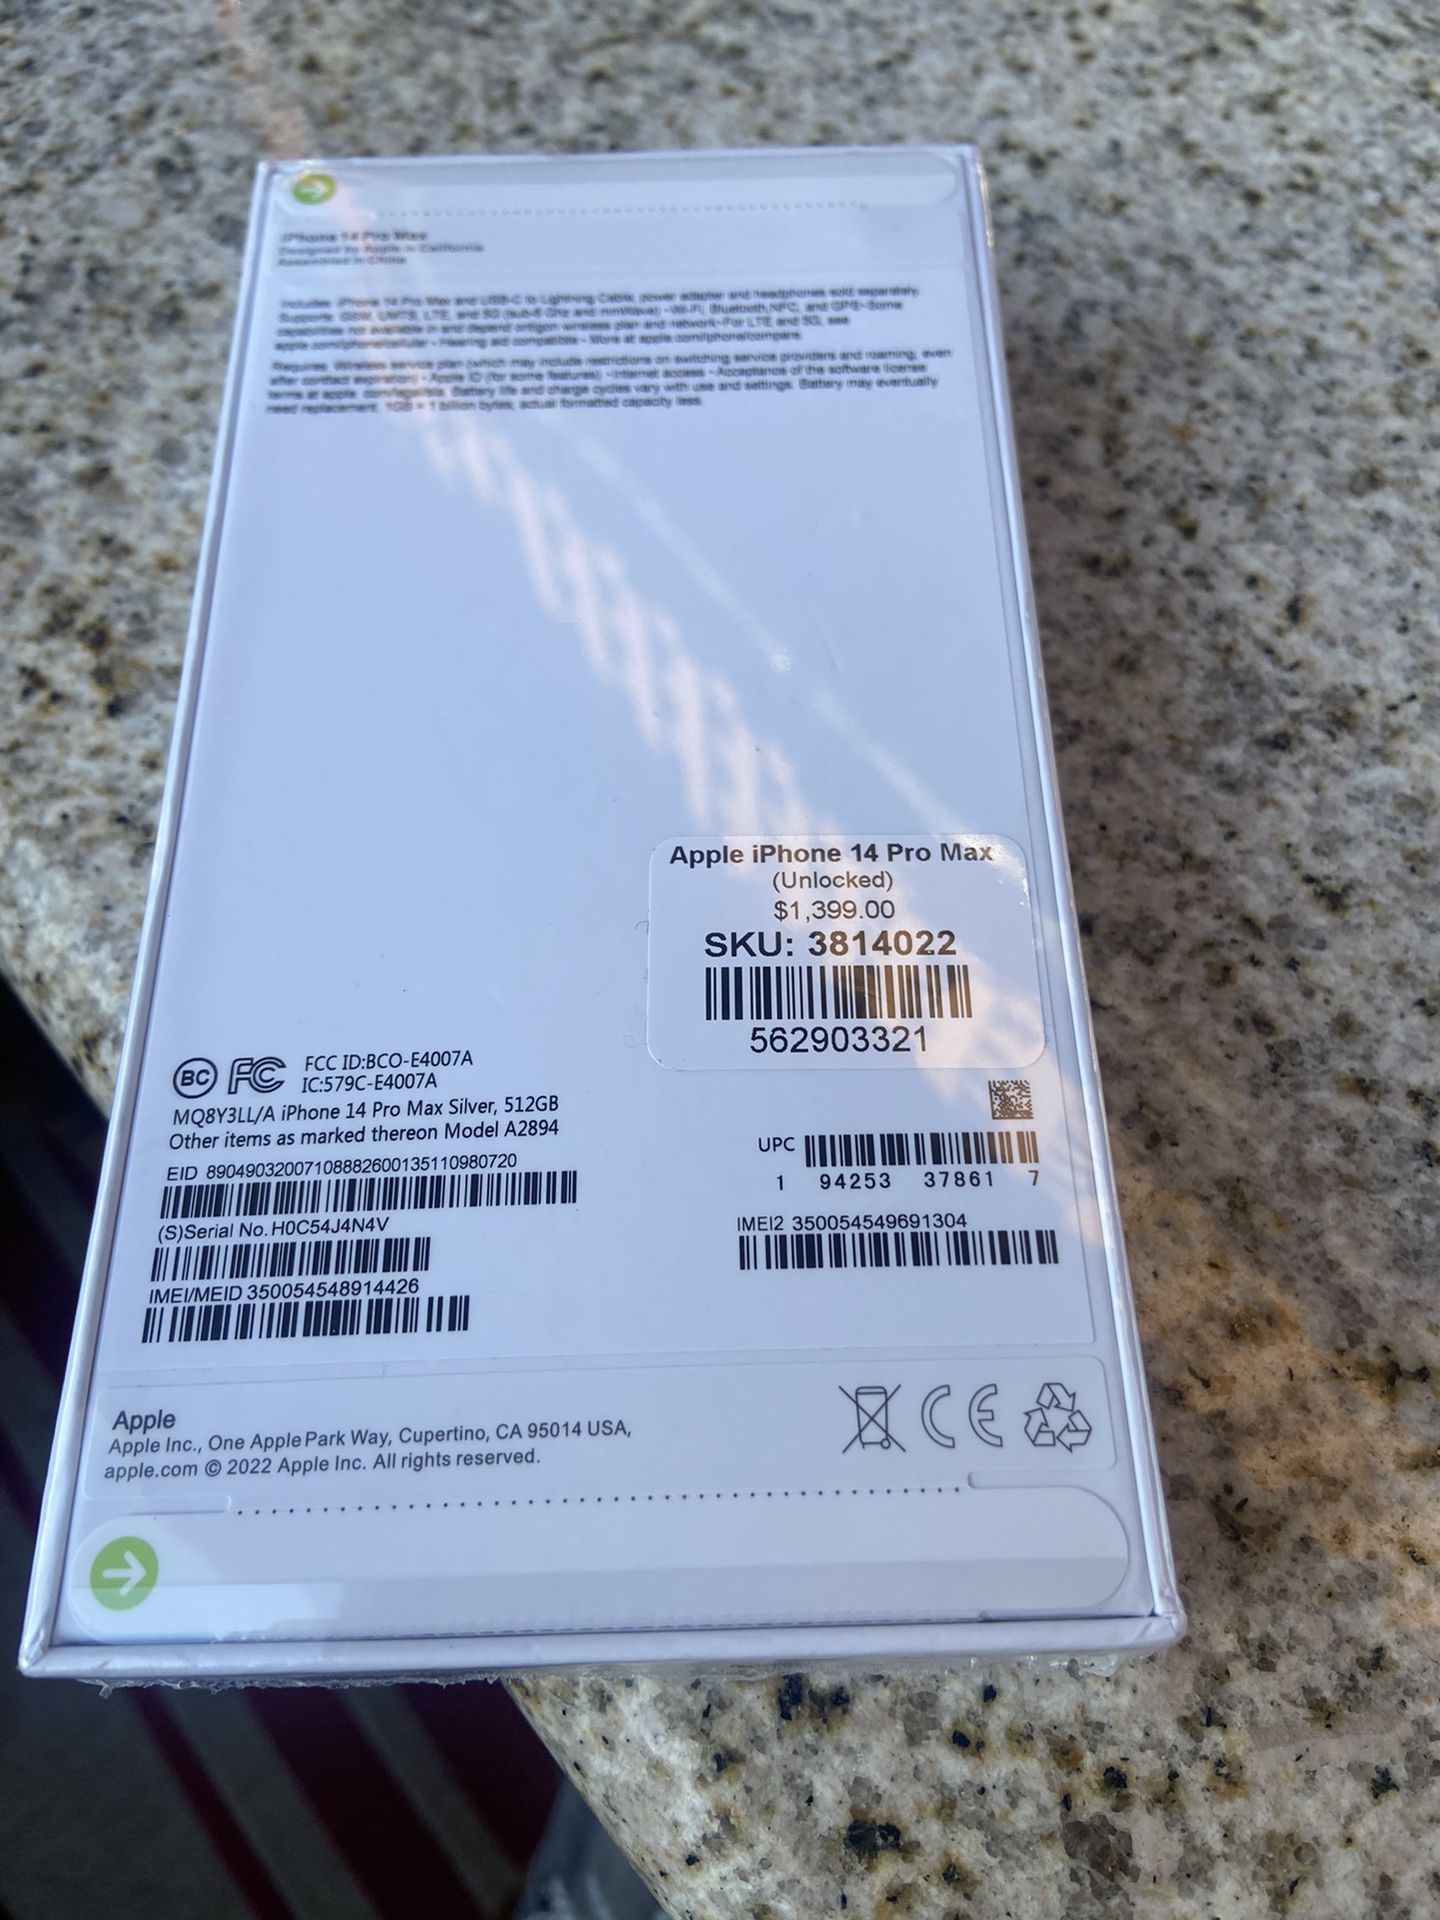 Supreme iPhone 12 Pro Max Case for Sale in Carson, CA - OfferUp